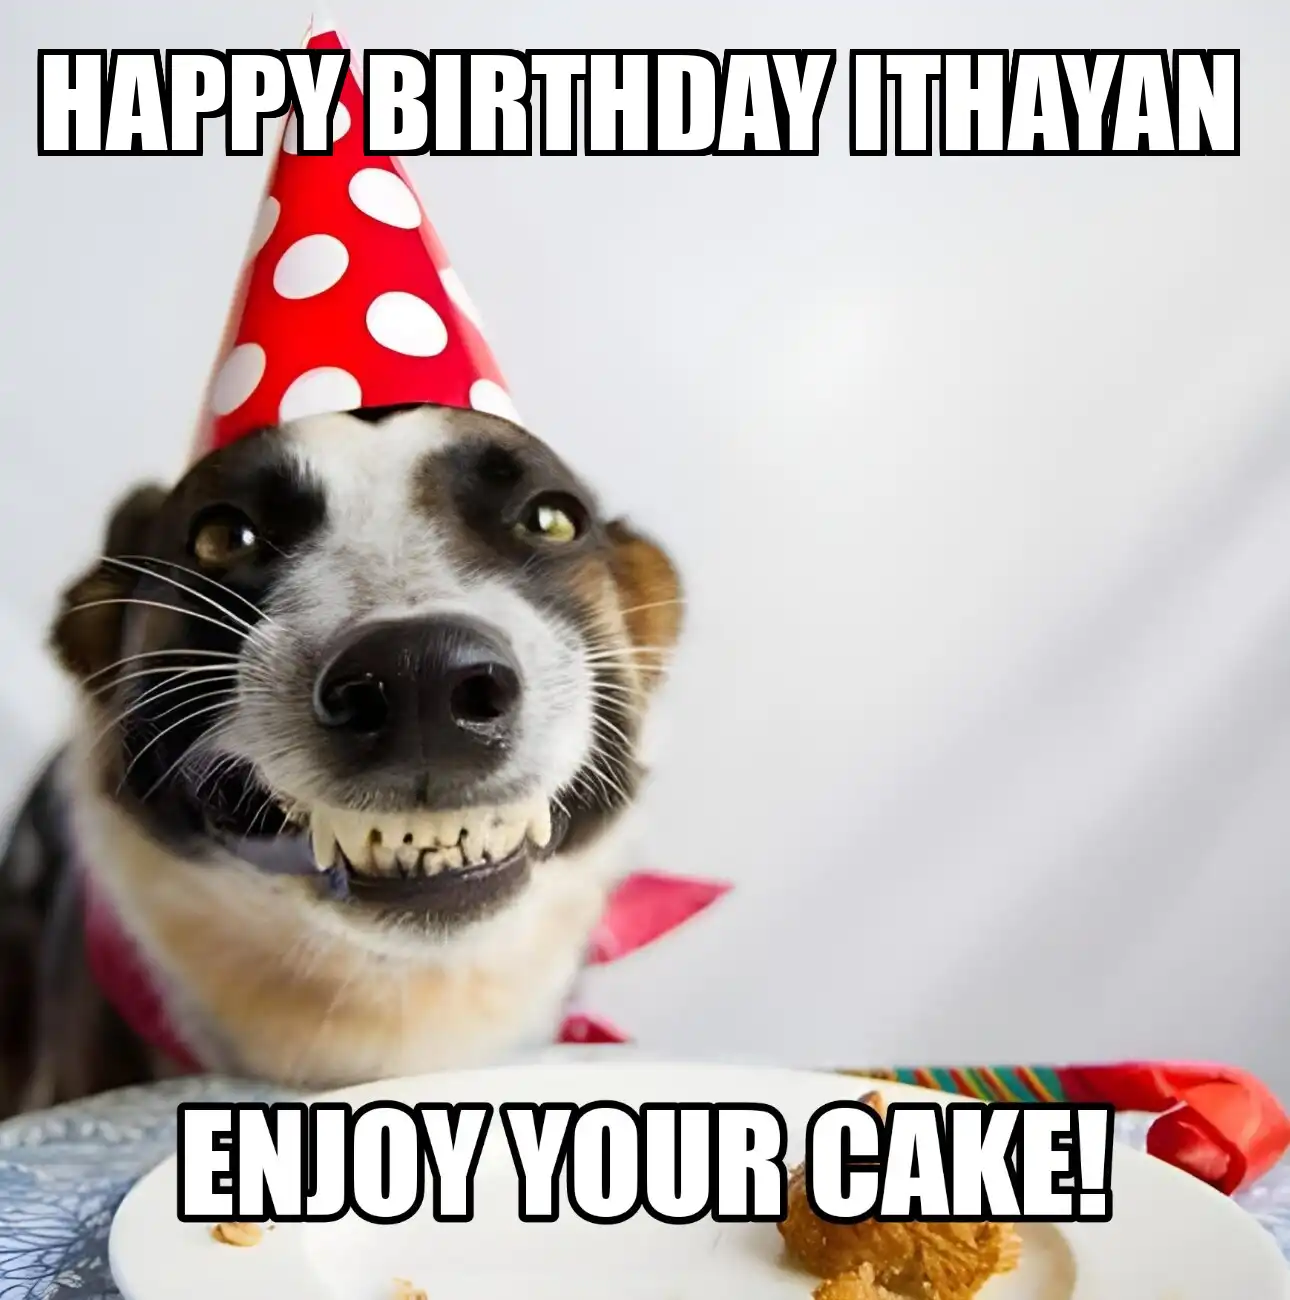 Happy Birthday Ithayan Enjoy Your Cake Dog Meme